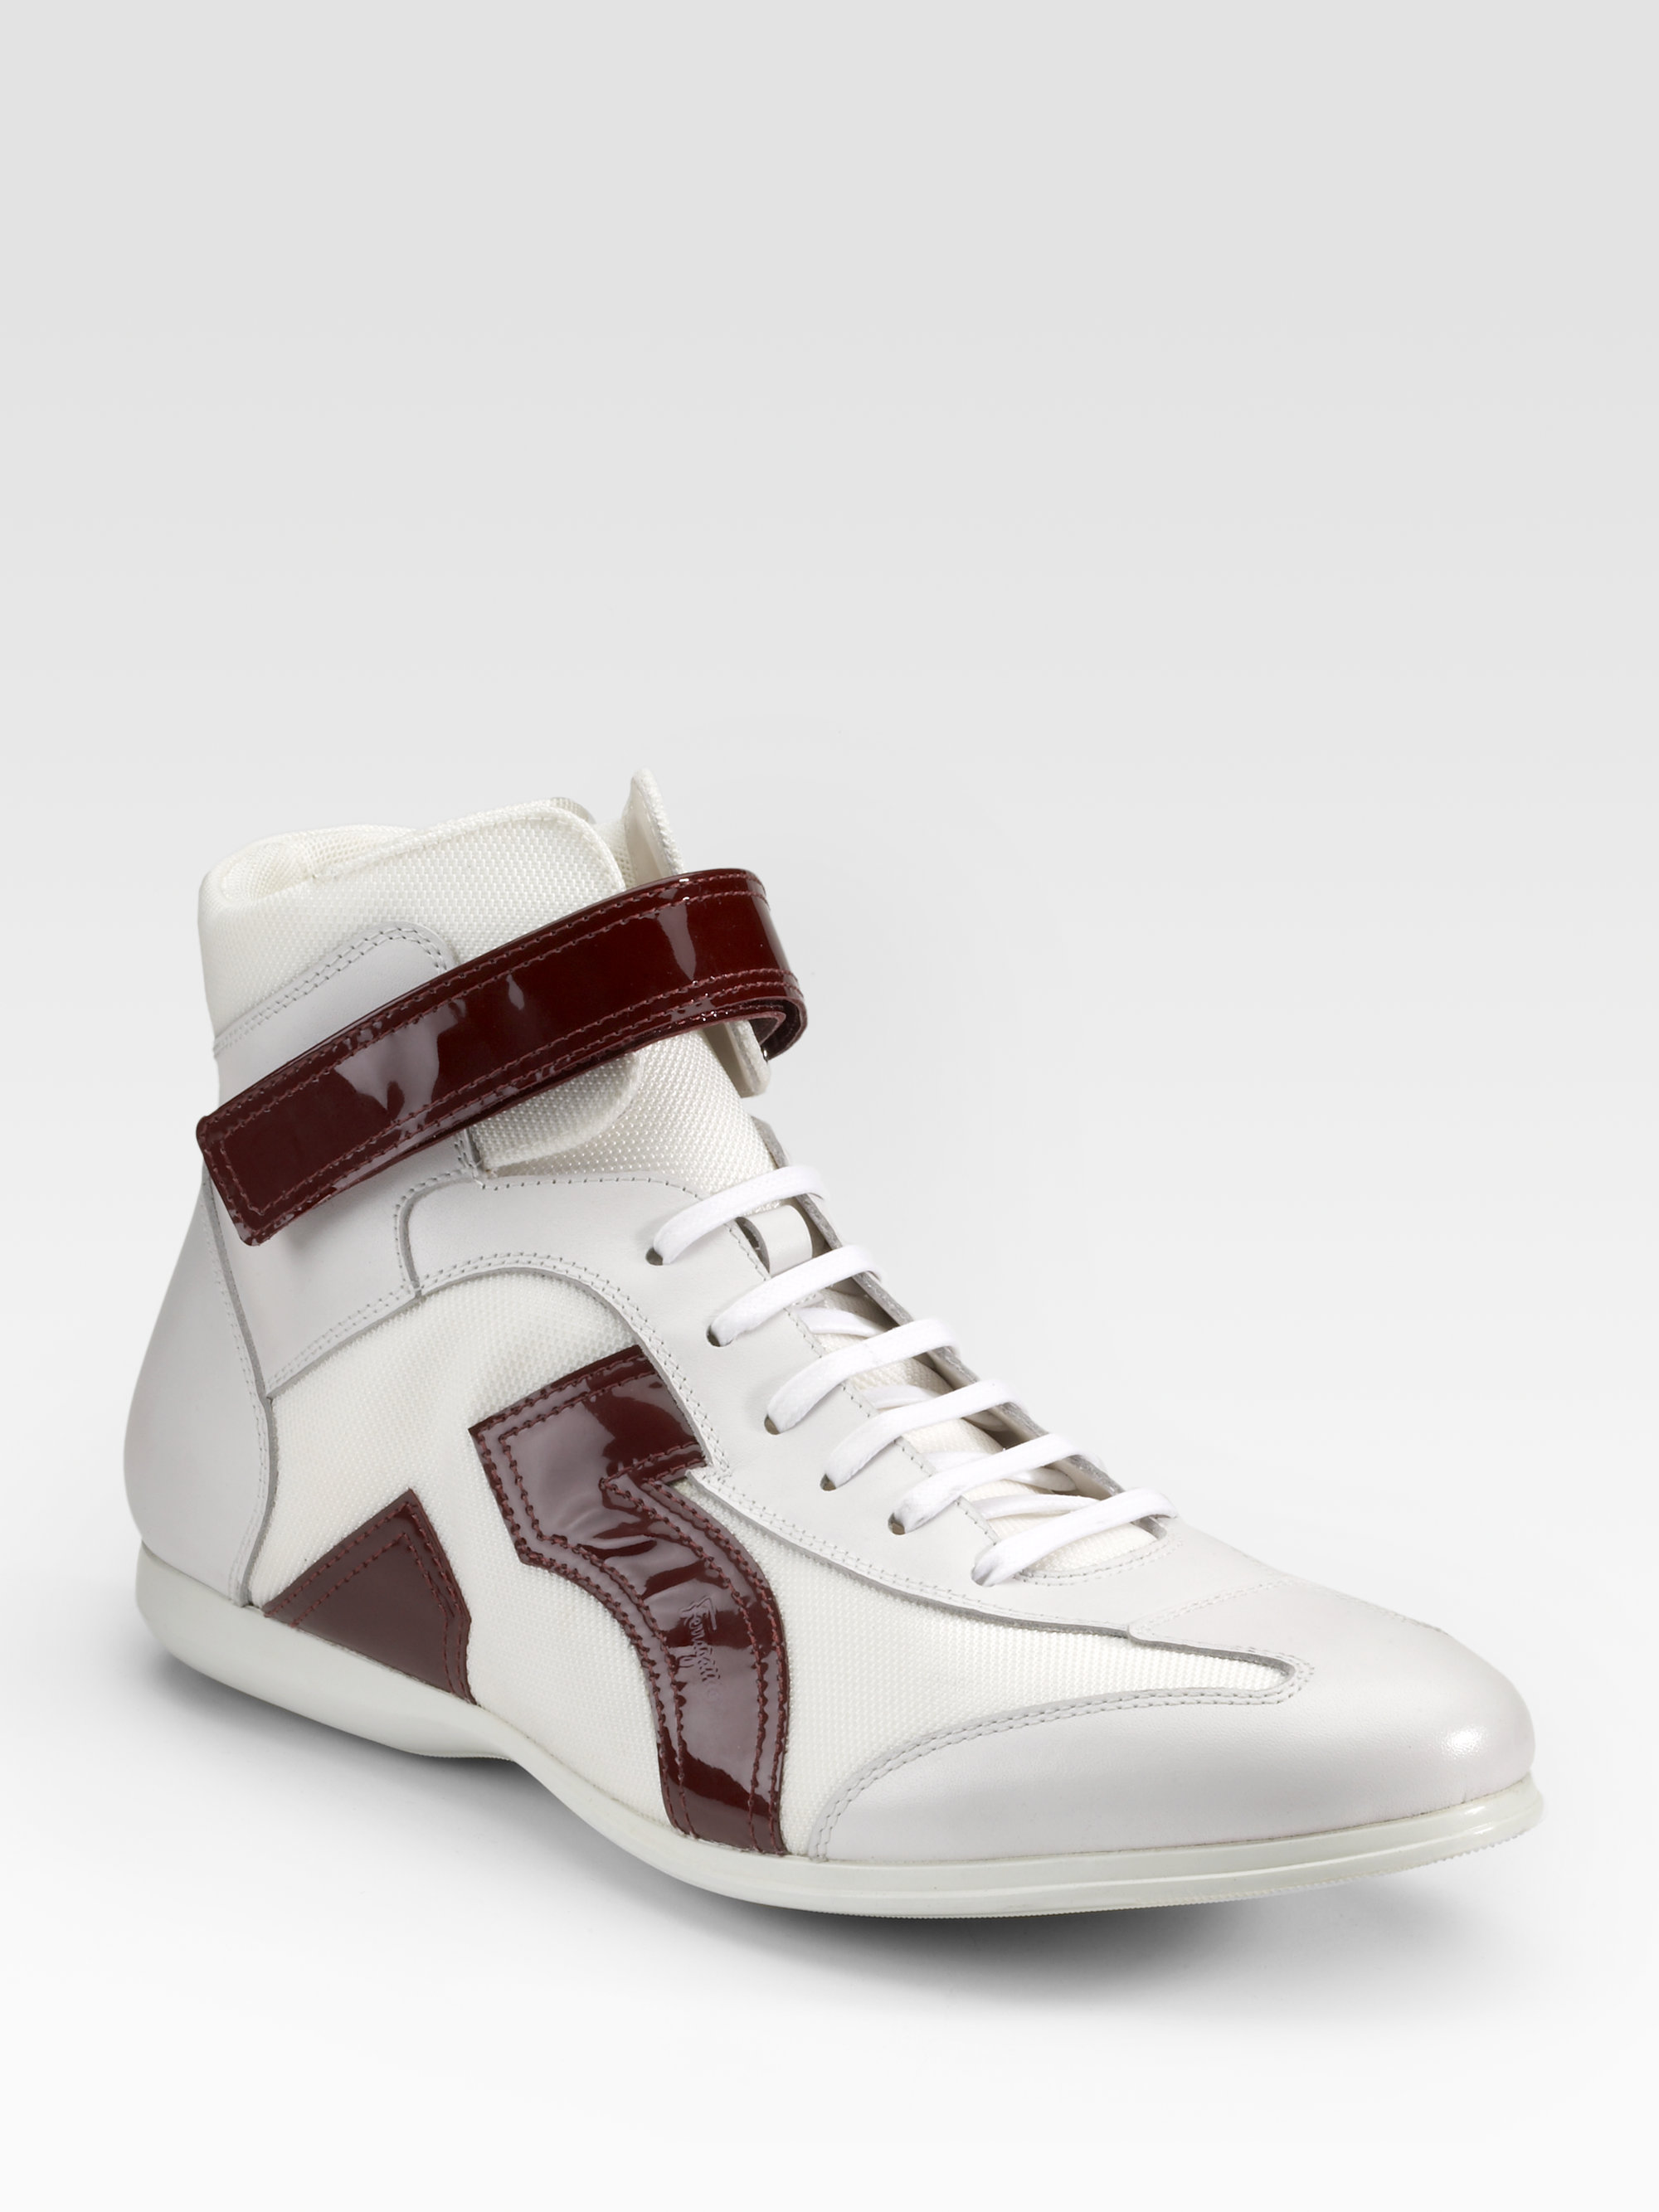 Ferragamo Landry High-top Sneakers white for Men - Lyst